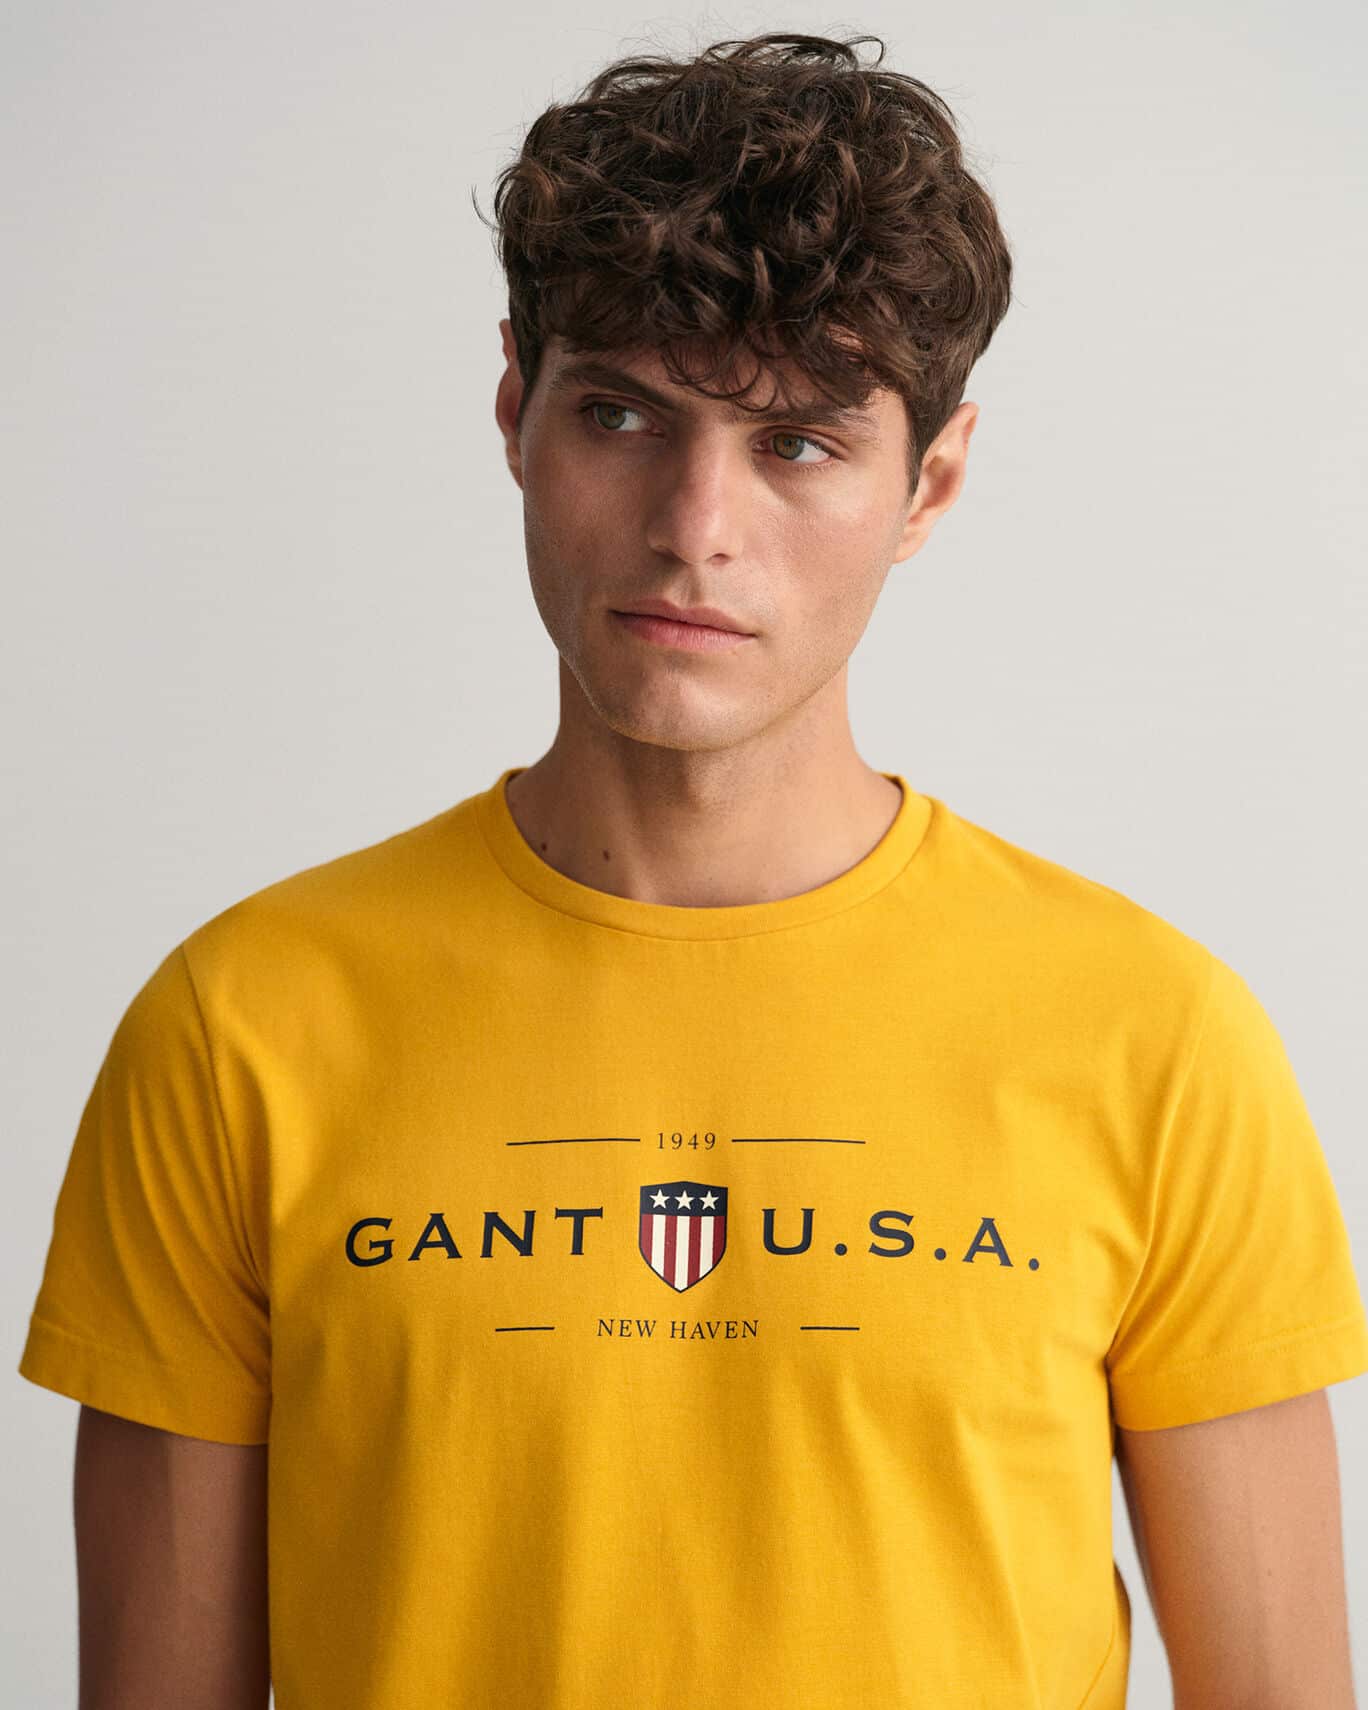 Buy Gant Banner Shield Scandinavian Store Gold T-shirt Ivy Fashion 